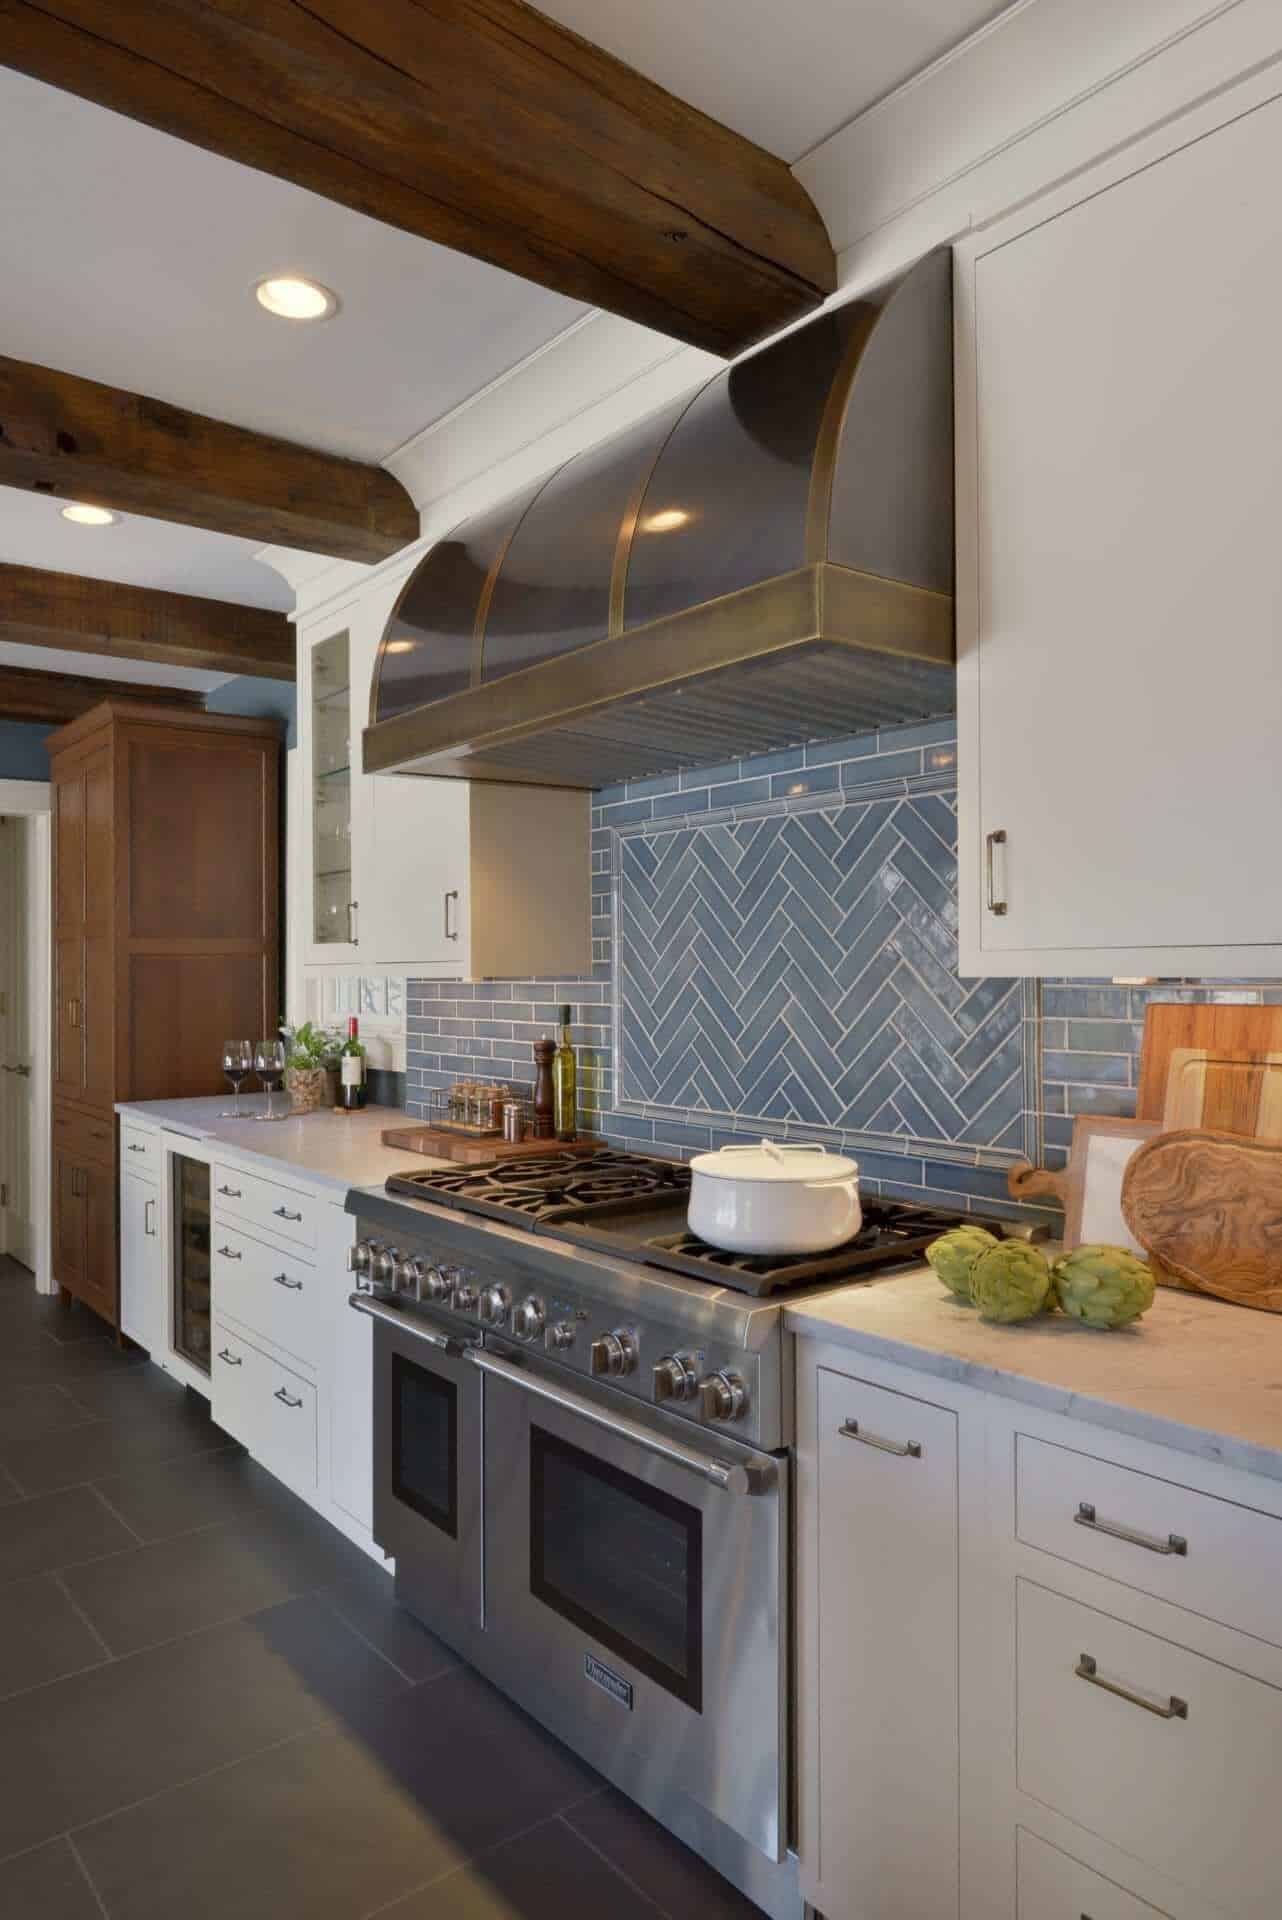 Kitchen features glazed blue tile backsplash, custom hood and white Bilotta cabinets with German antique glass inserts.